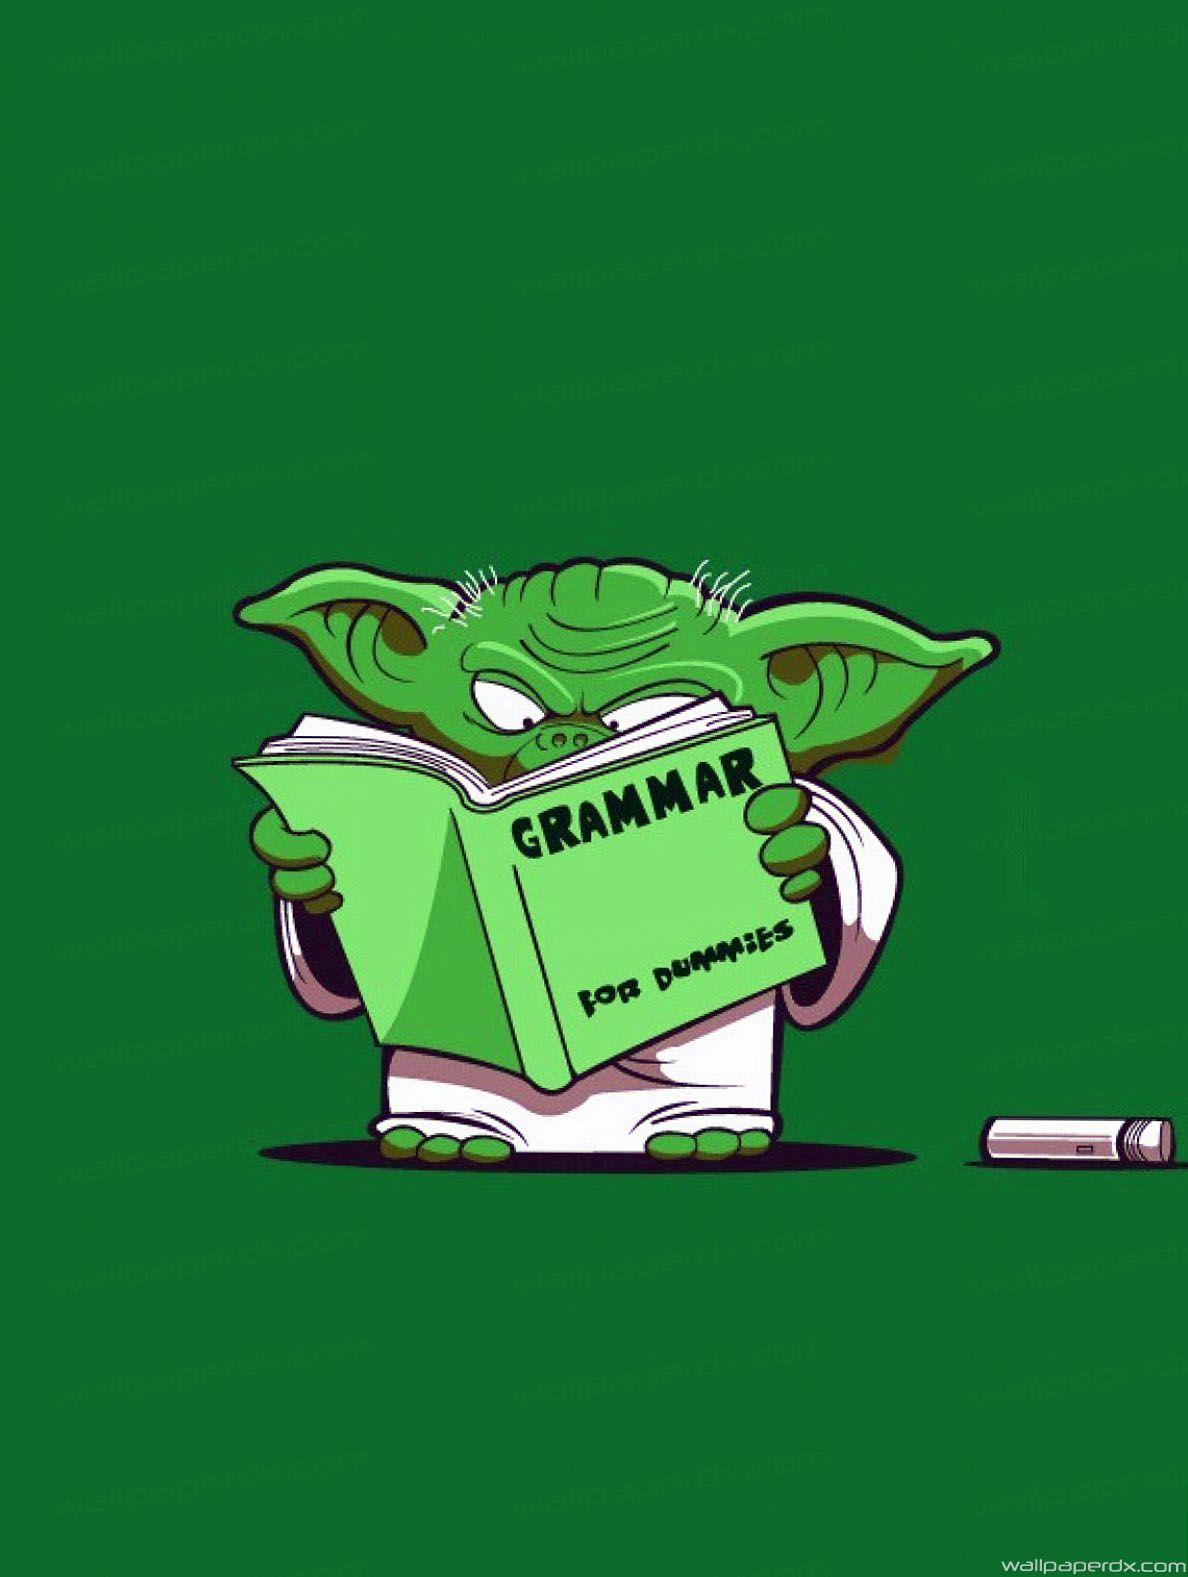 Yoda Reads Grammar Book Green full HD android Wallpaper